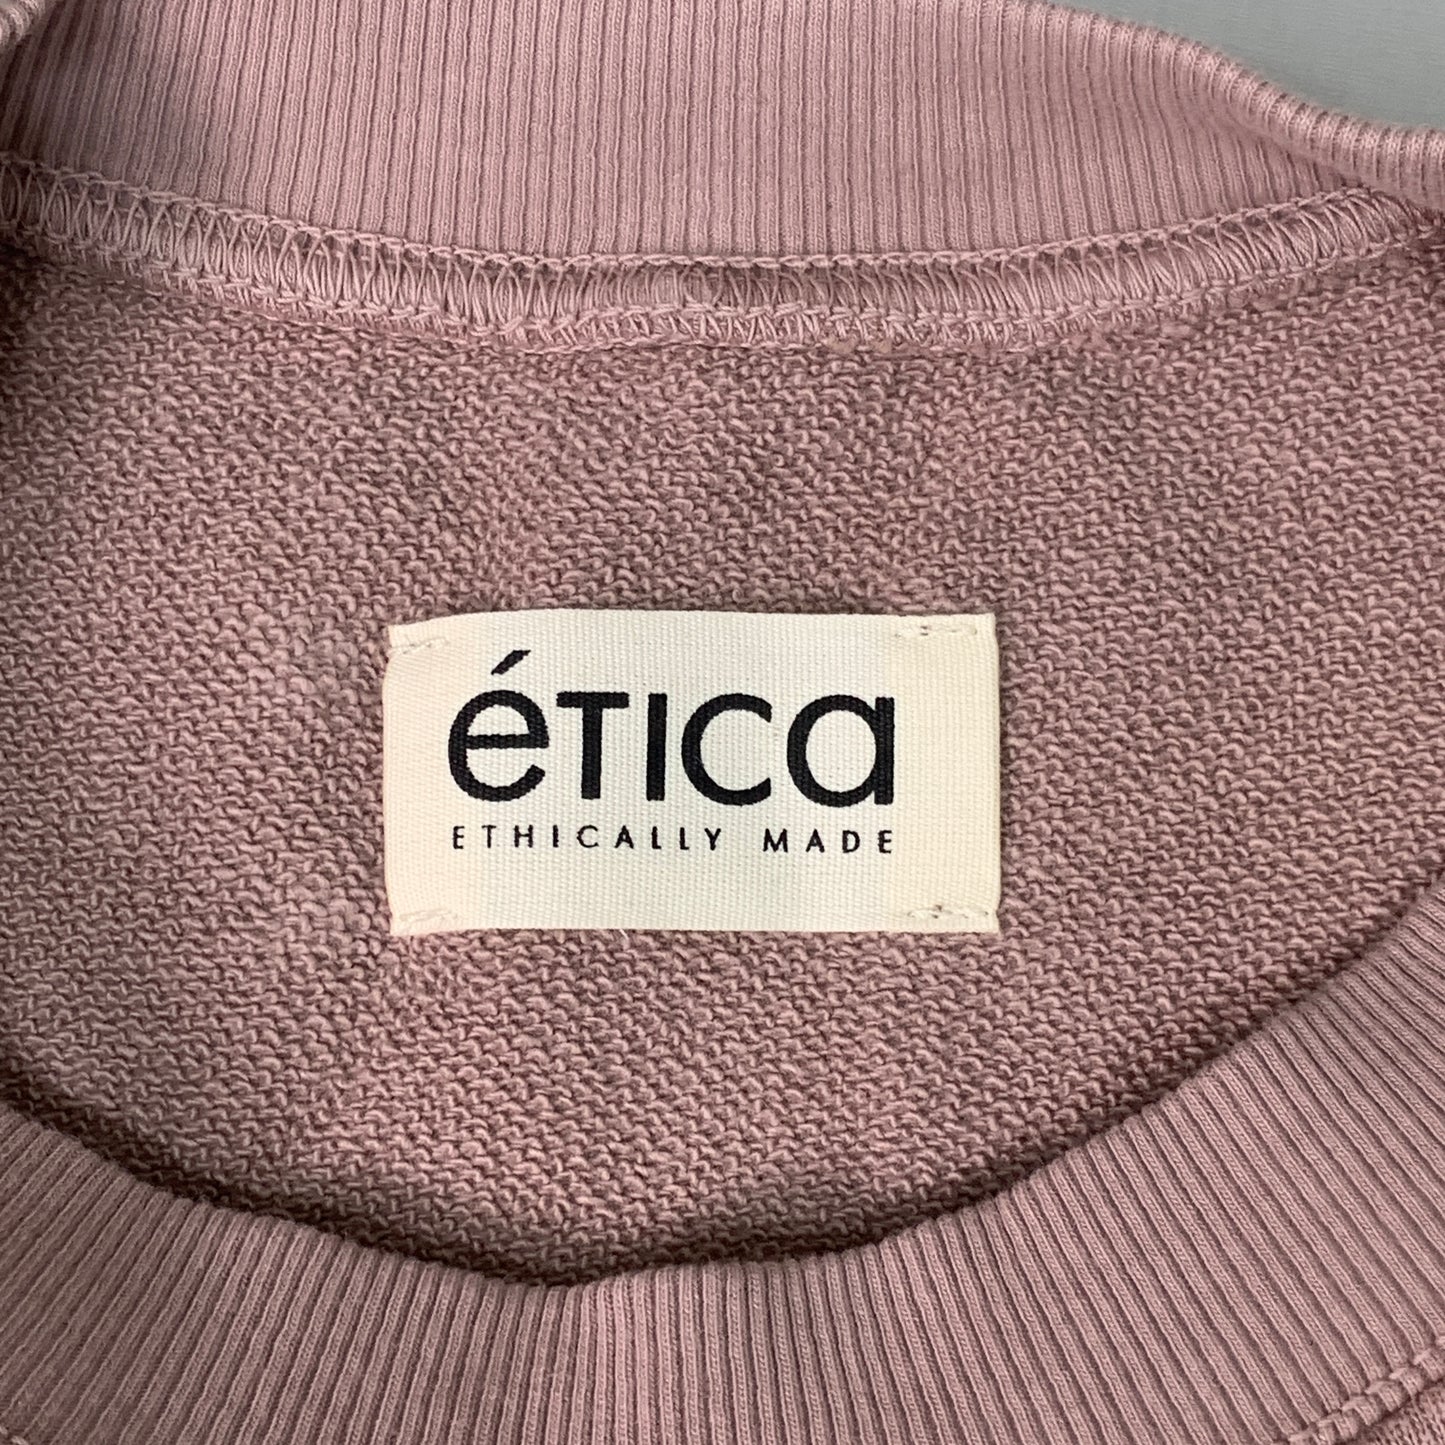 ETICA Viola Sweatshirt Dress Pleated Drop Shoulder Wood Rose Size Large EW174415